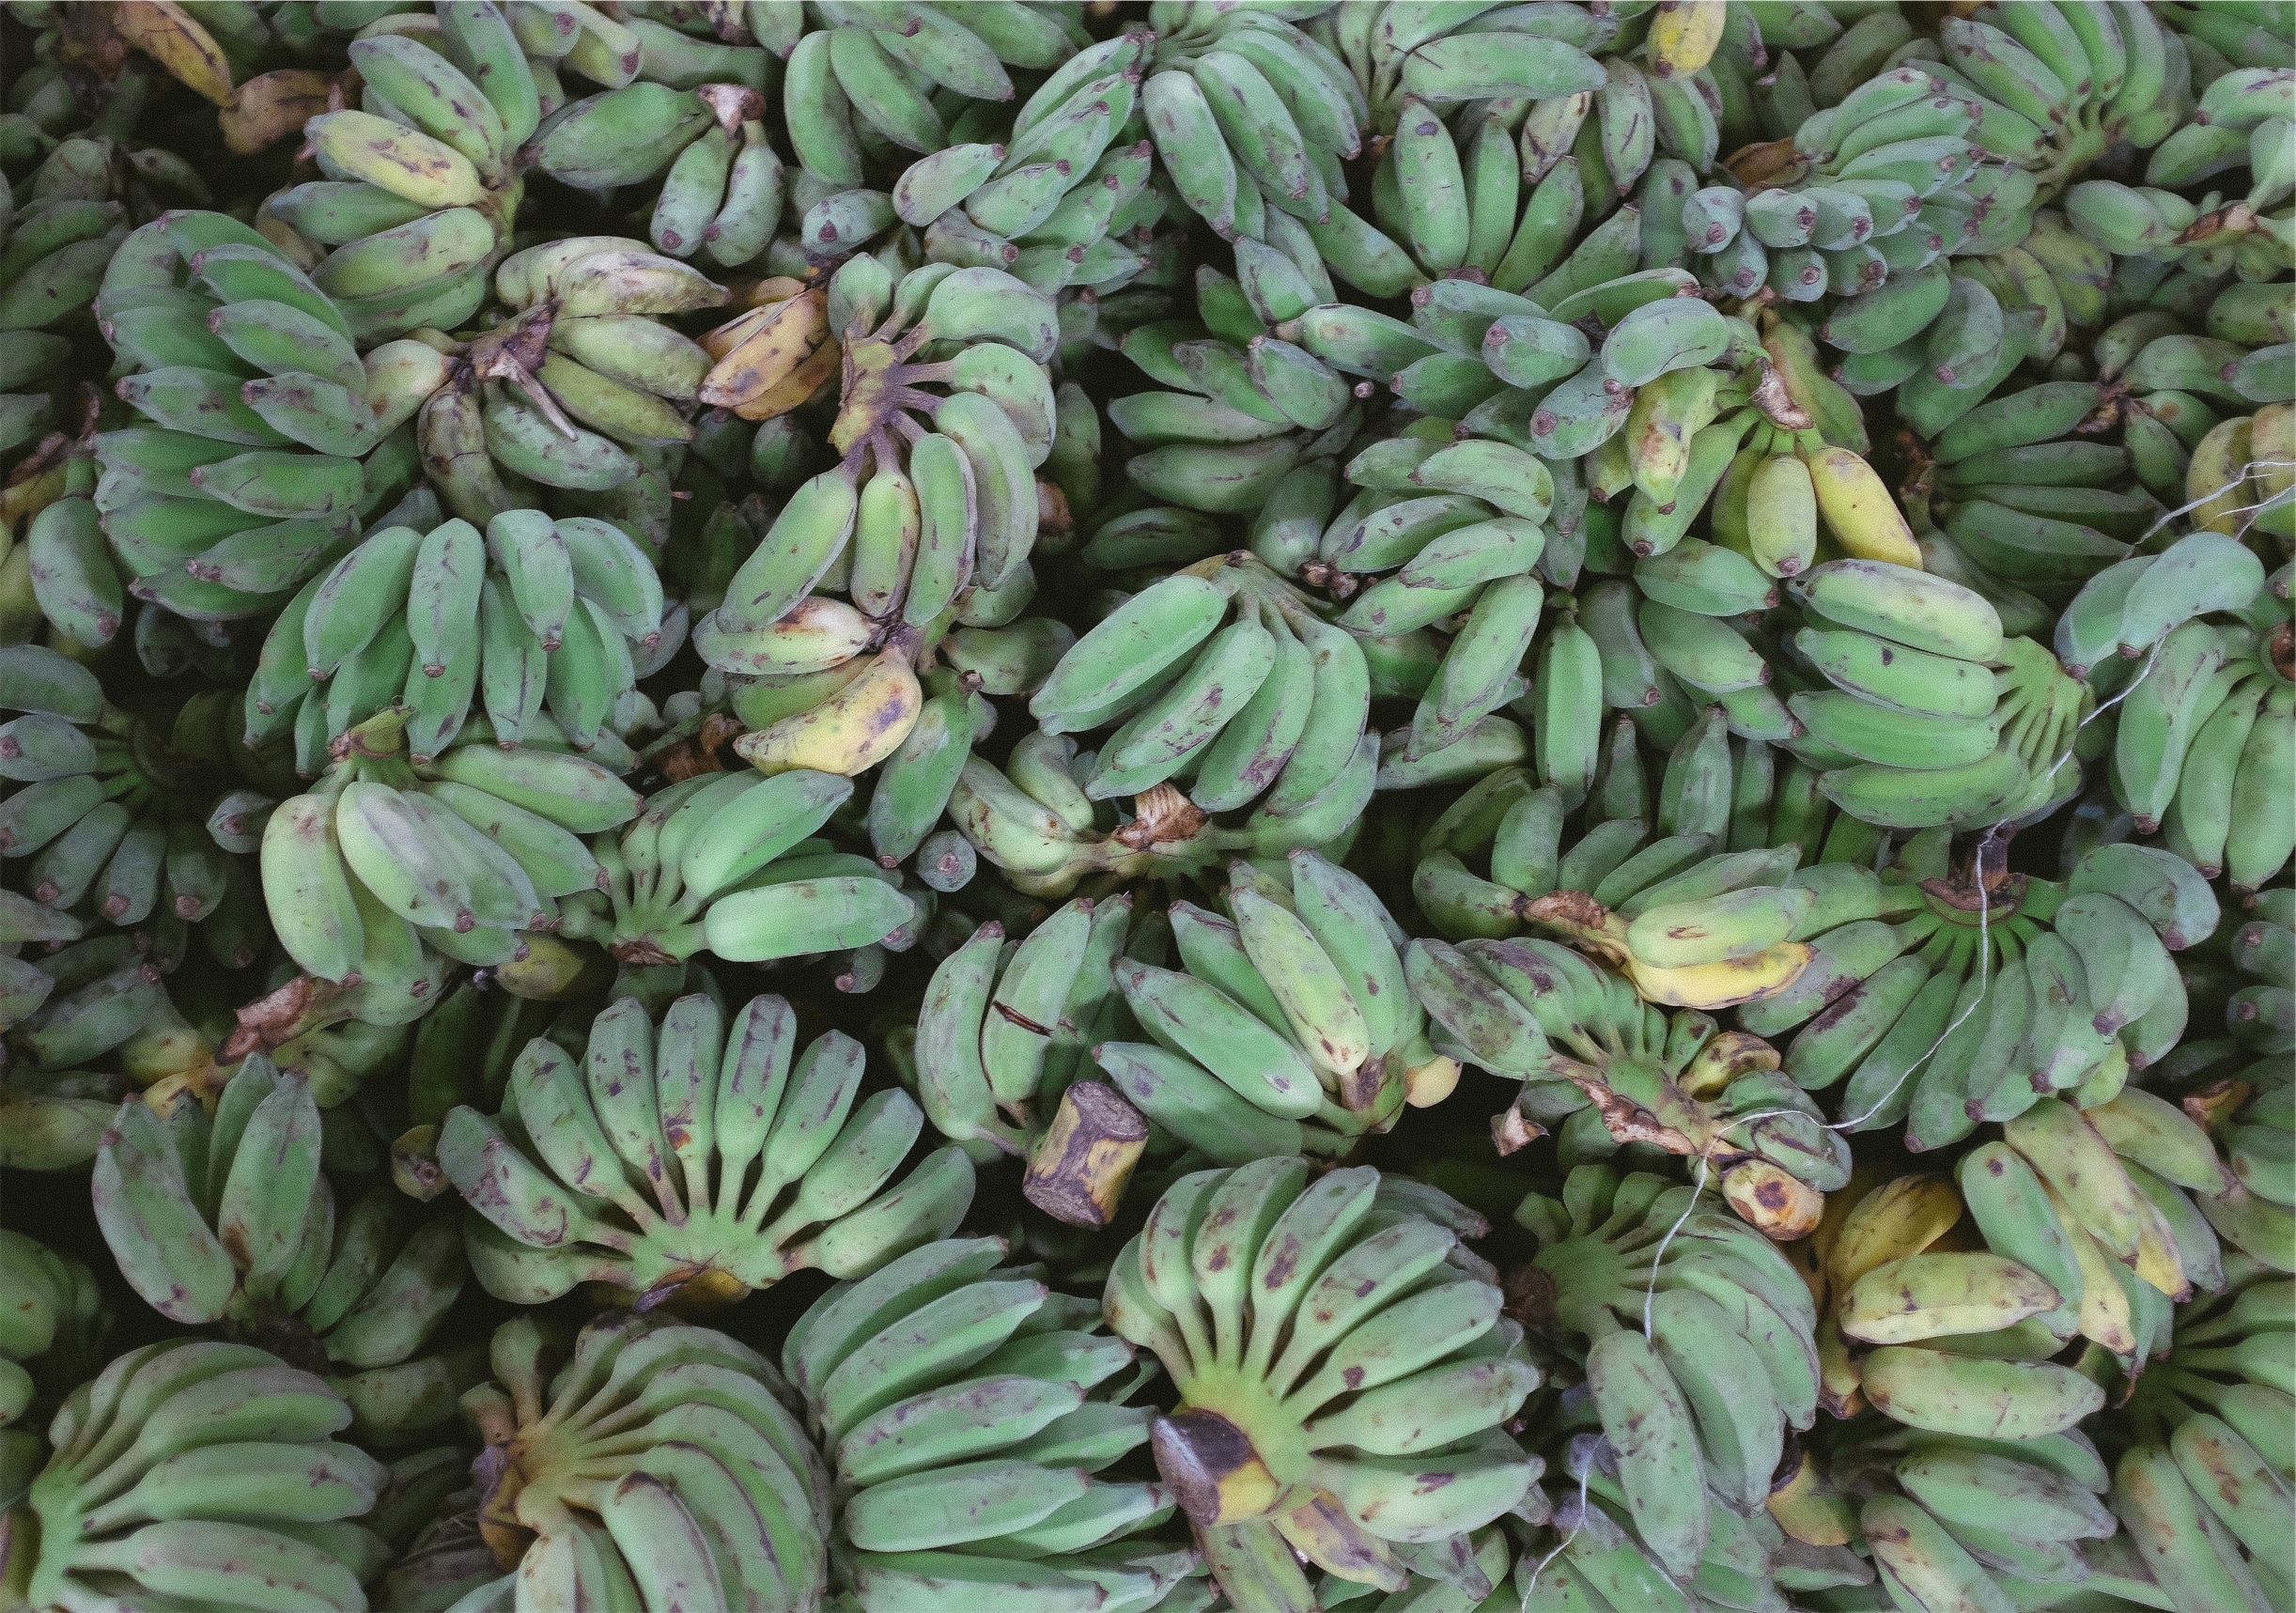 unripe bananas